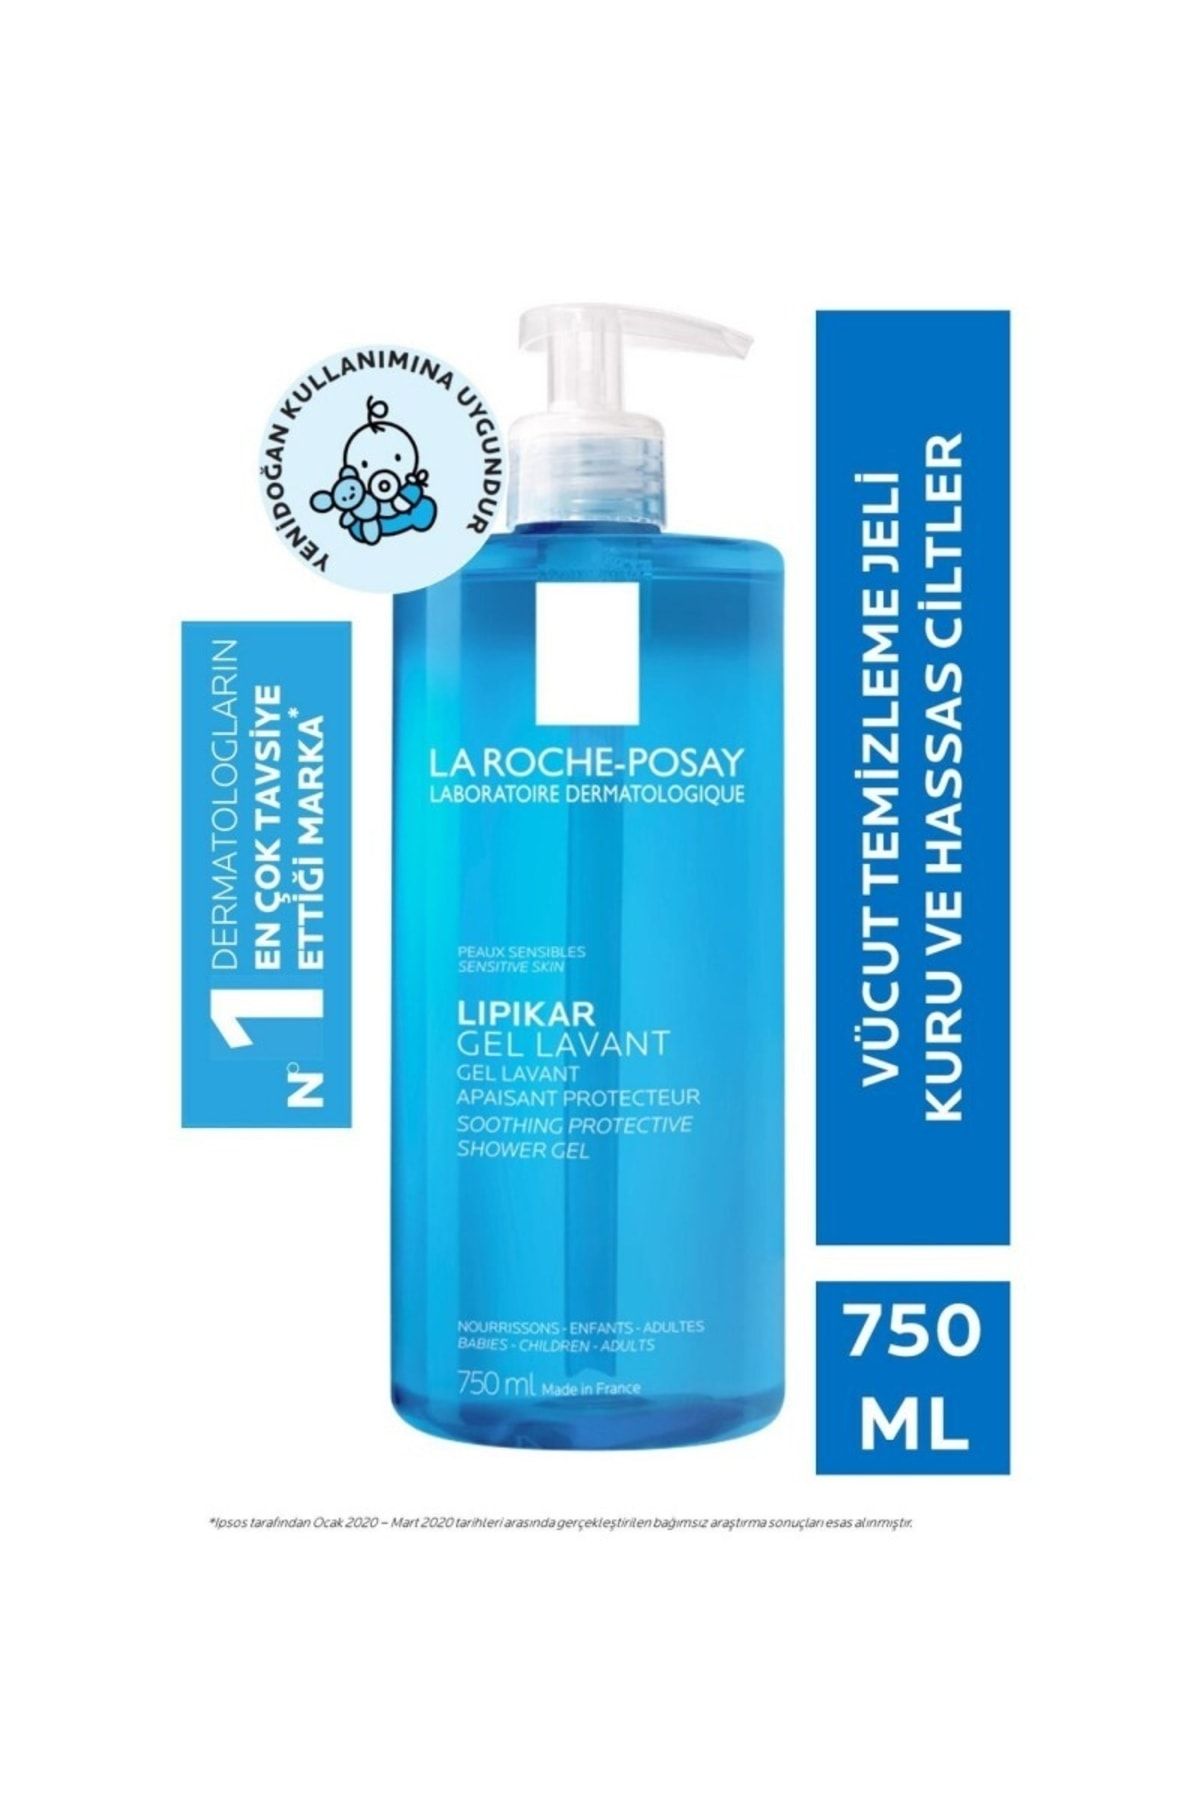 La Roche Posay ژل تمیزکننده صورت و بدن برای پوست خشک و حساس 750 میلی لیتر